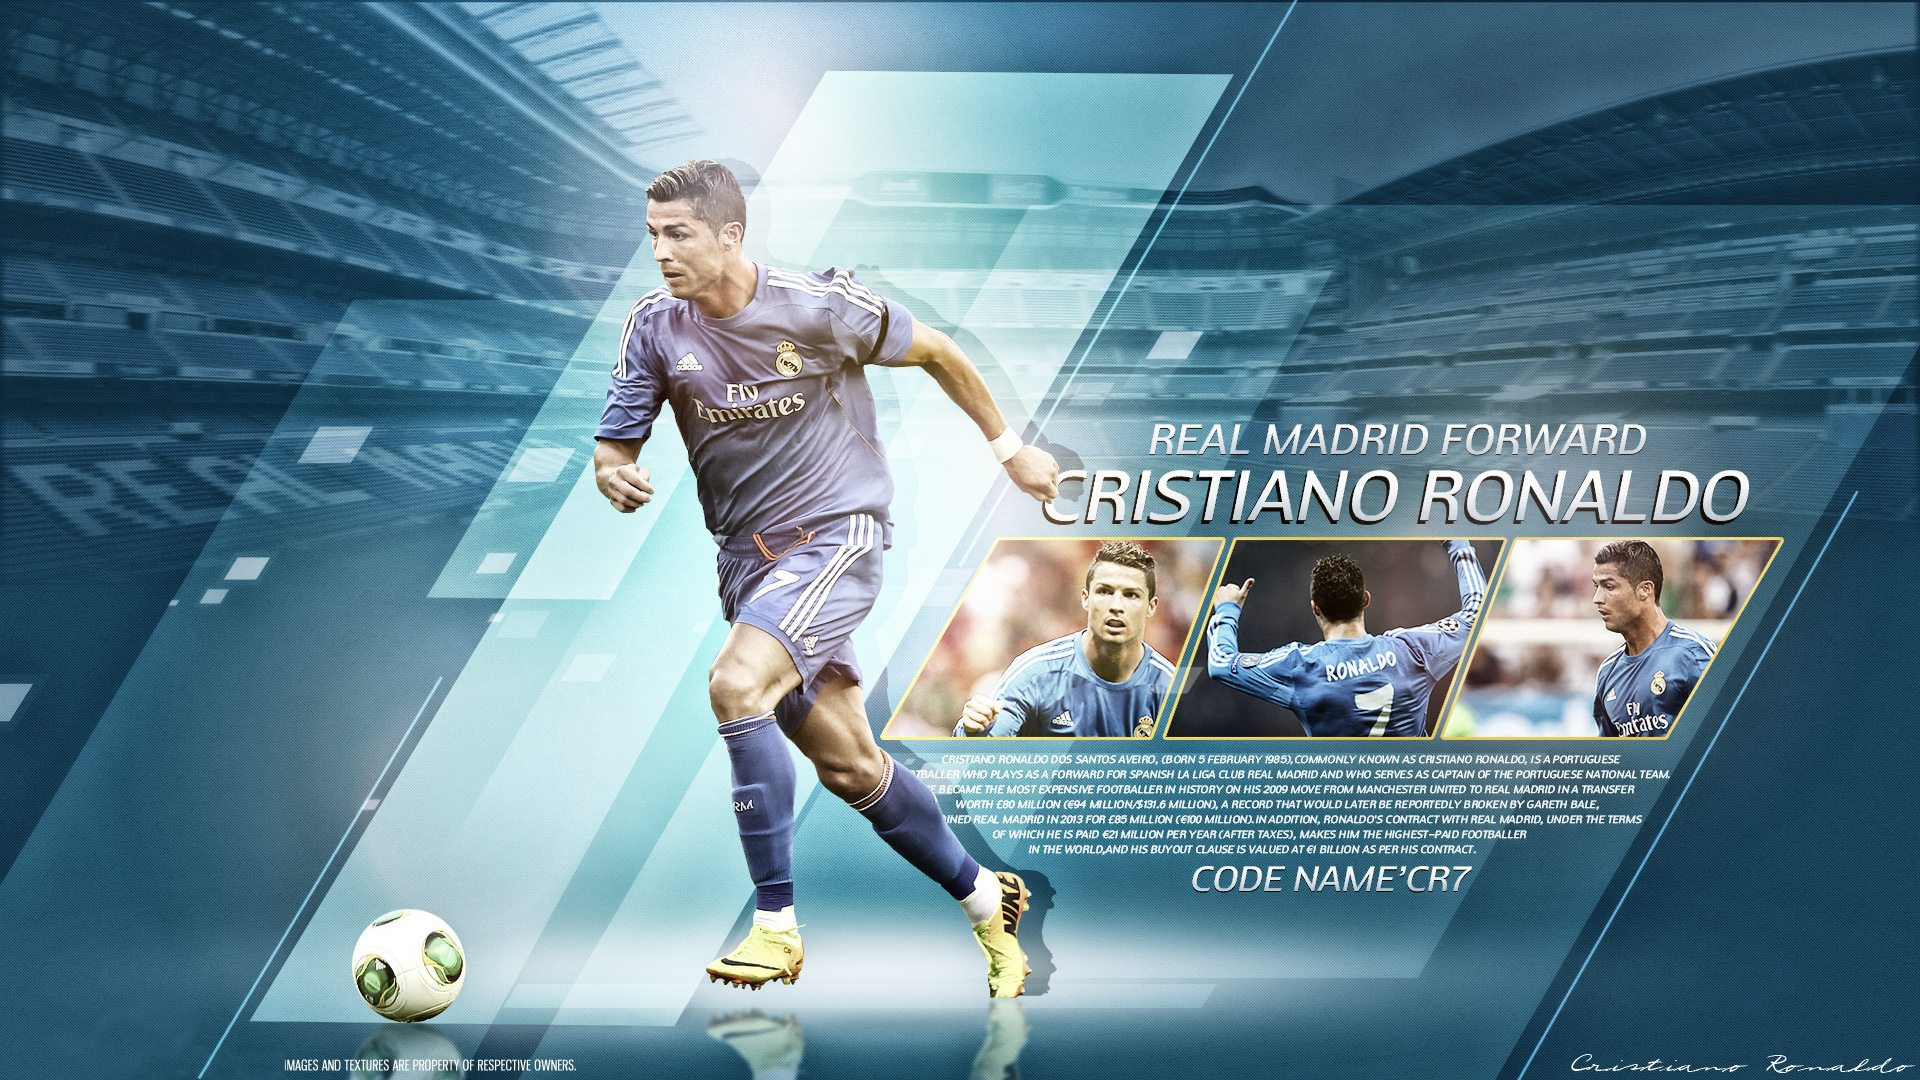 Cristiano Ronaldo Real Madrid wallpaper - Cristiano Ronaldo Wallpapers